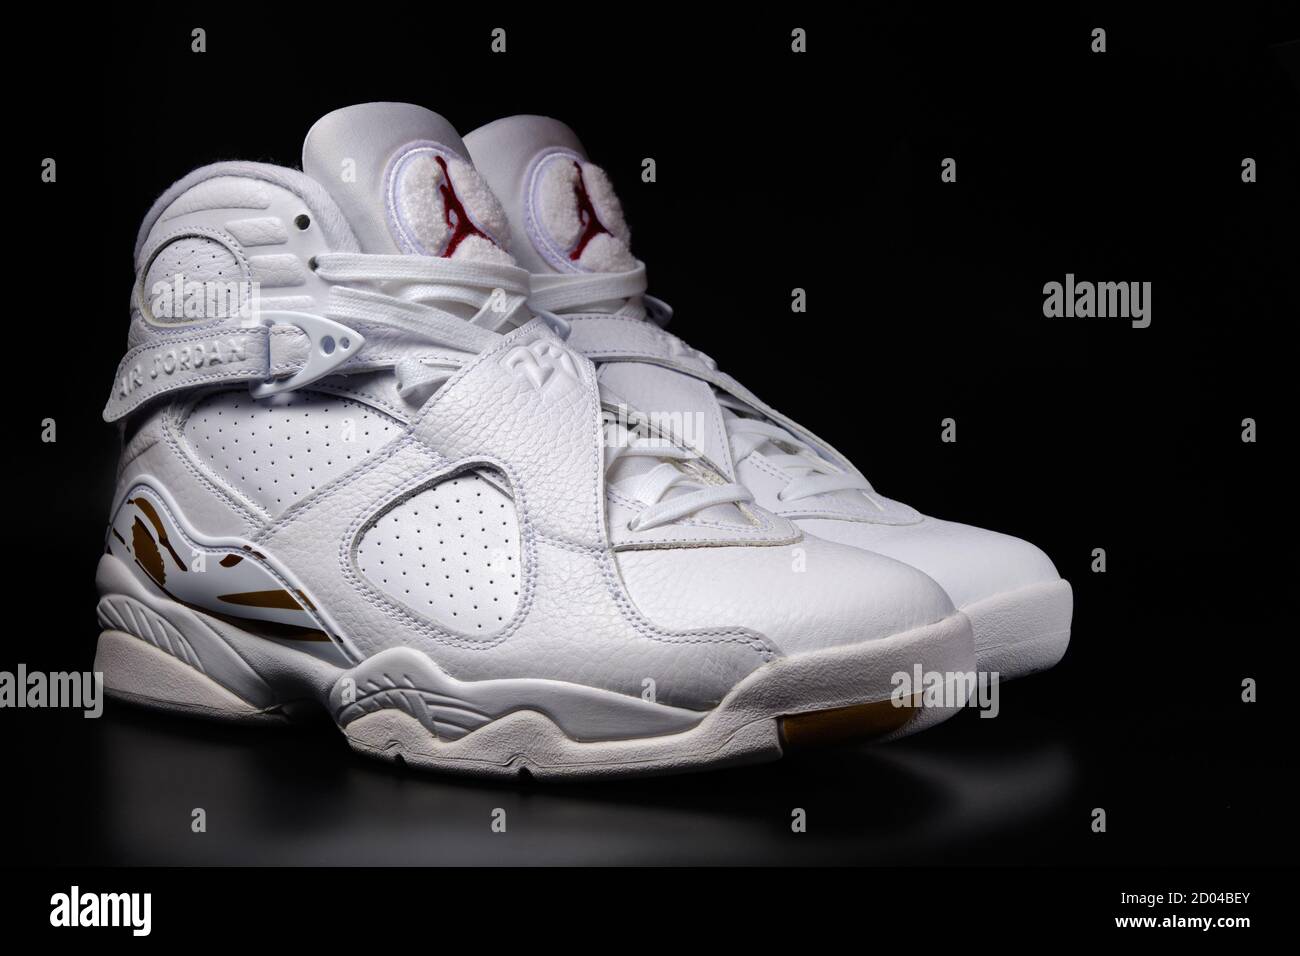 Nike Air Jordan 8 Retro OVO Drake White colorway sneakers on black  background illustrative editorial Stock Photo - Alamy